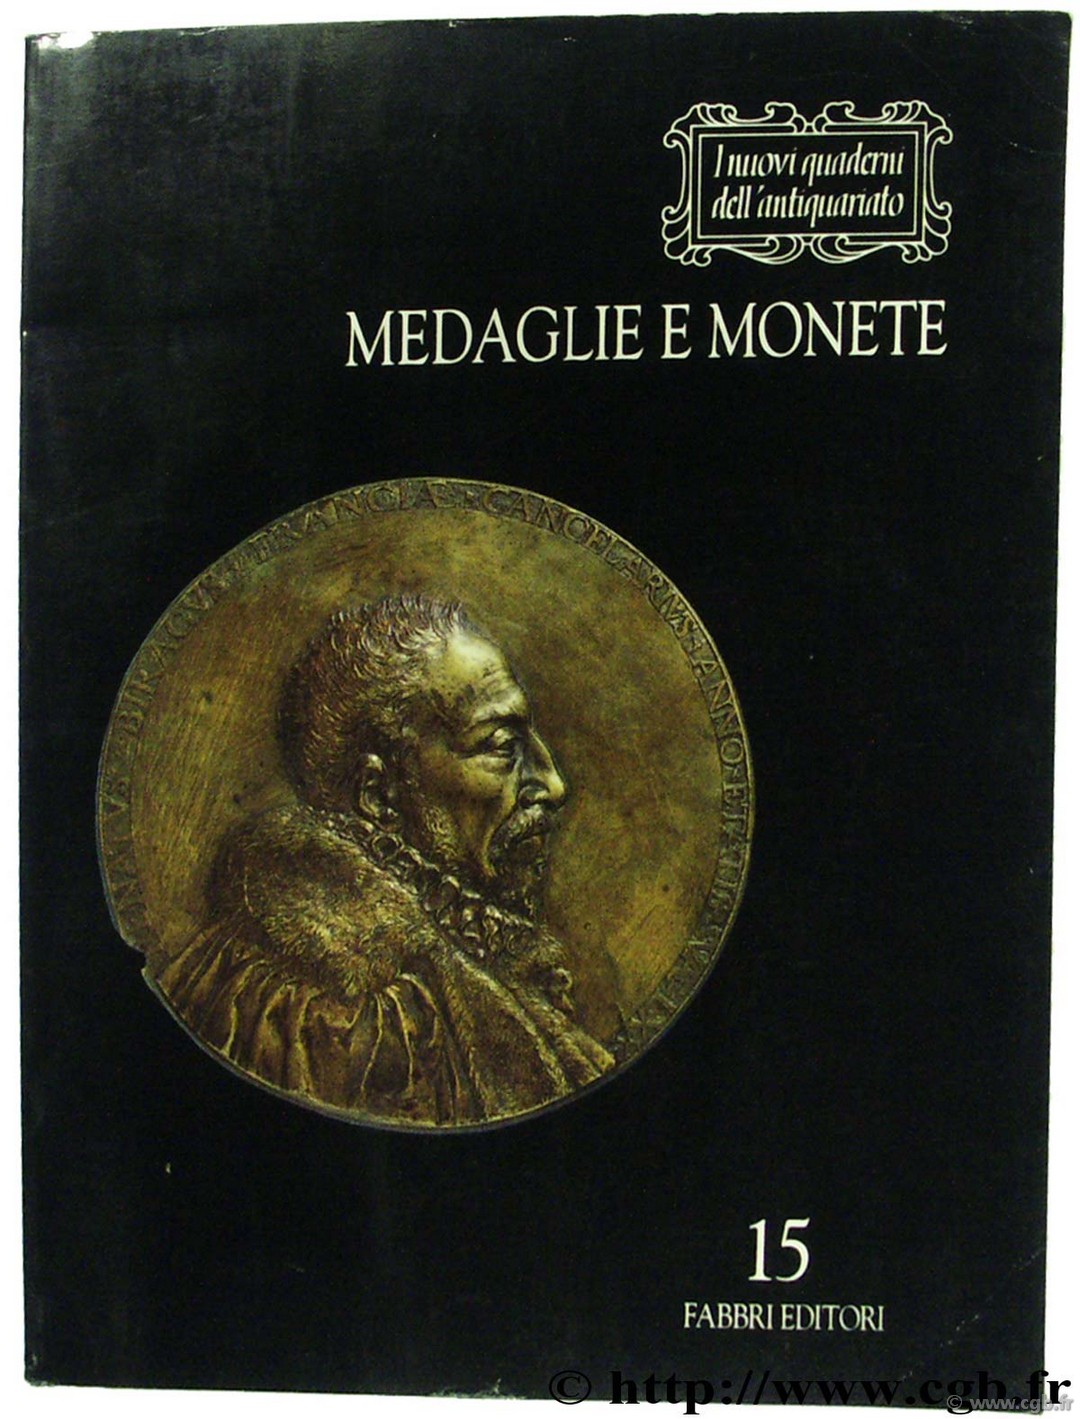 Medaglie e monete - 15 fabbri editori POLLARD G., MAURI G.